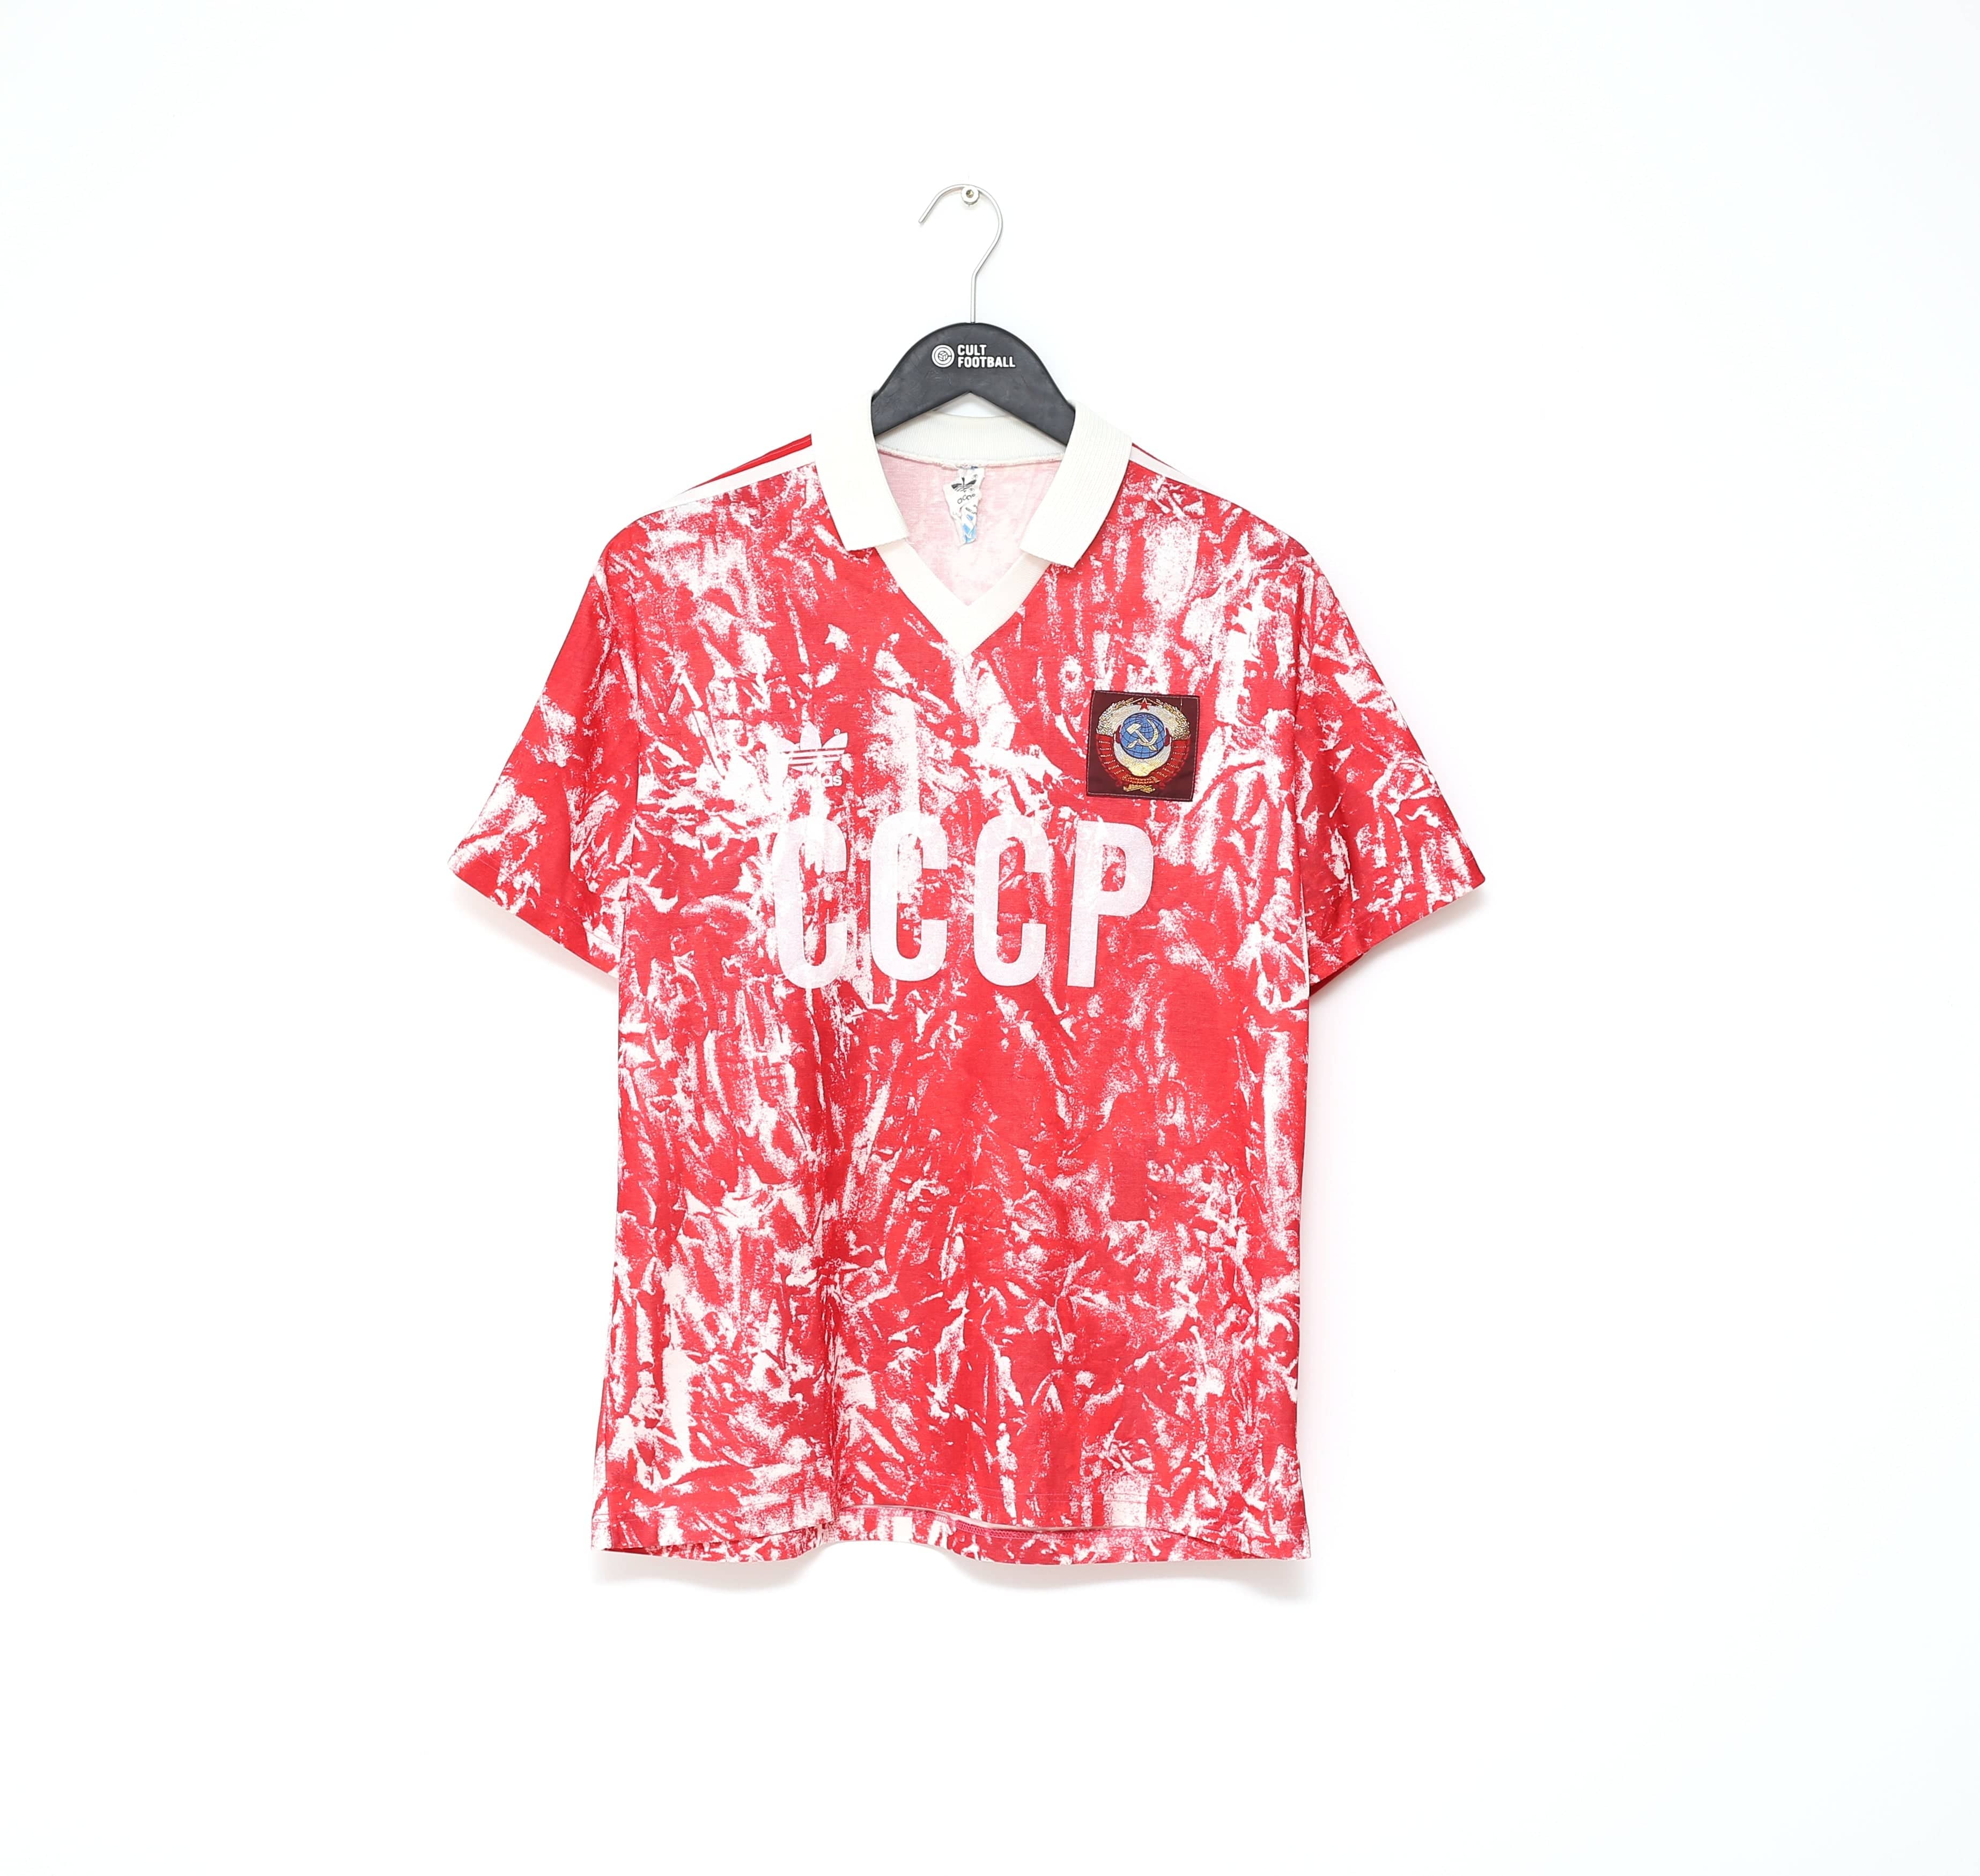 CCCP / USSR Home football shirt 1991.